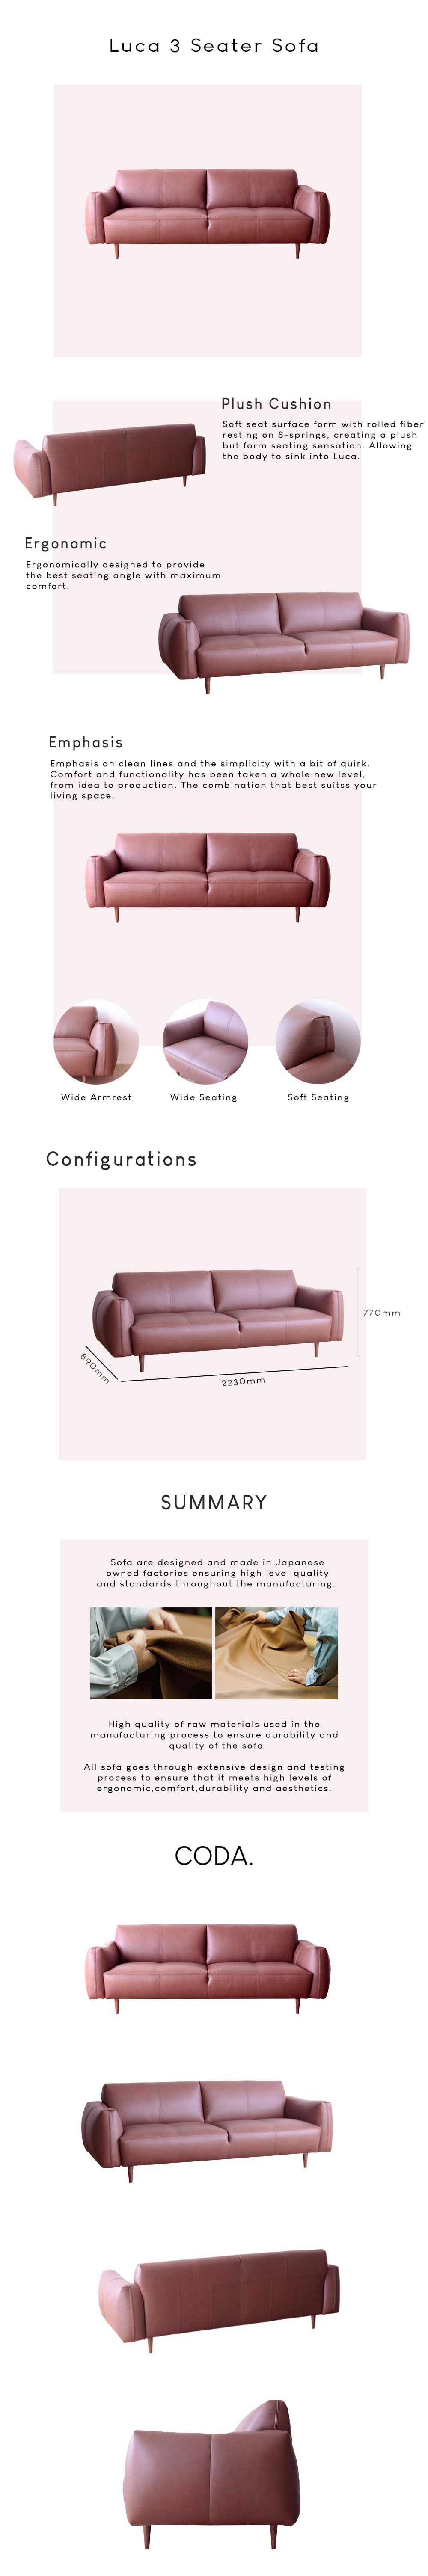 luca 3 seater fabric sofa details